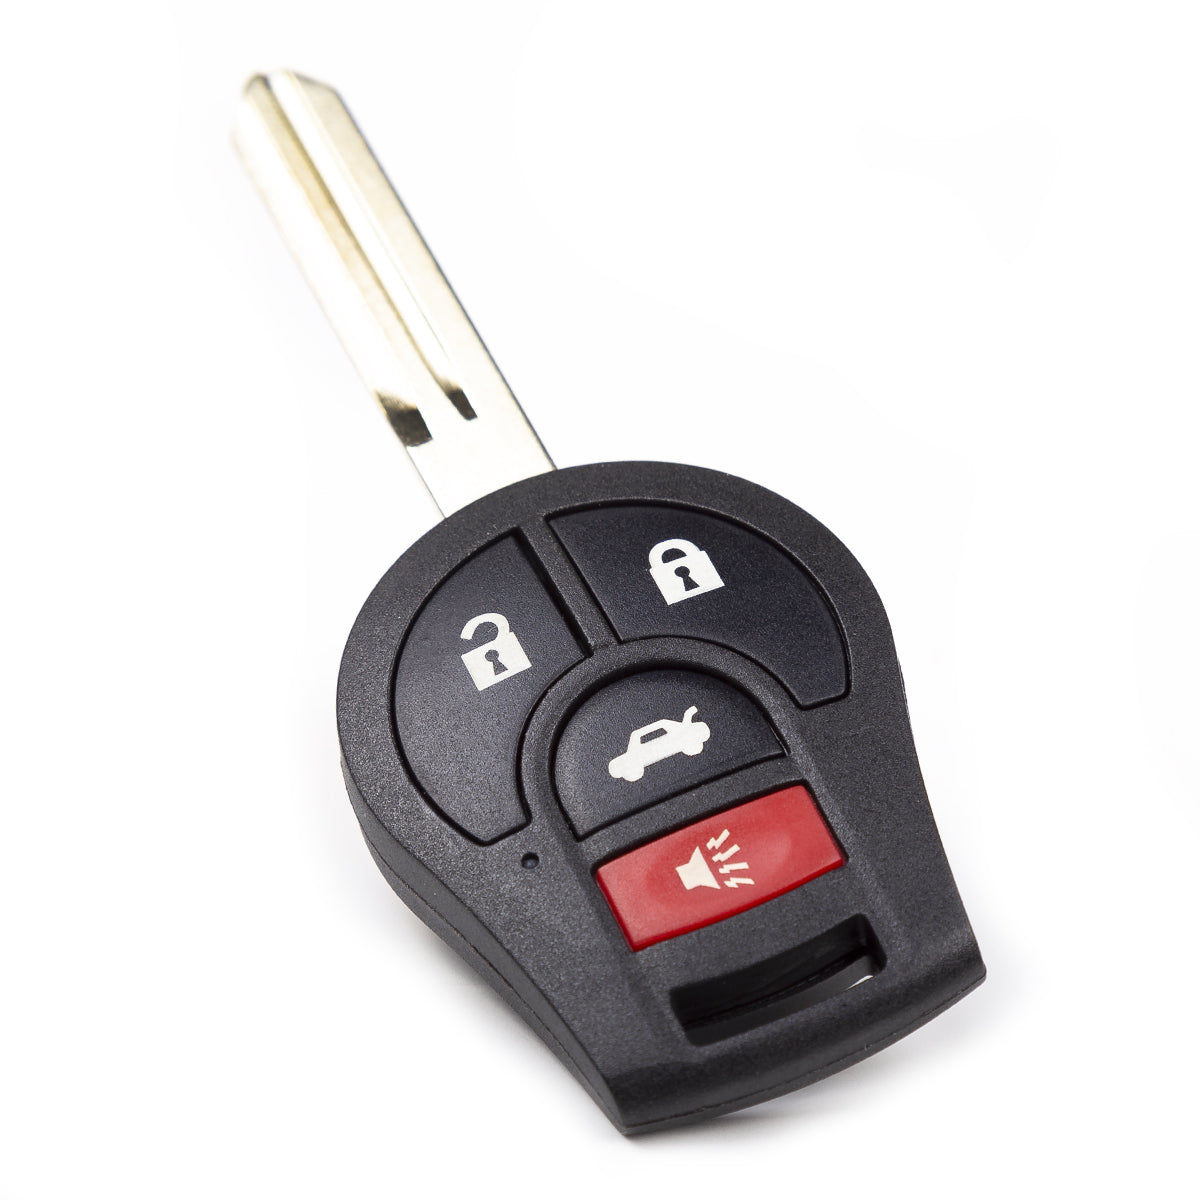 2007 Nissan Armada Key Fob - Aftermarket - 4 Buttons Fob FCC# CWTWB1U751 - ID46 Chip